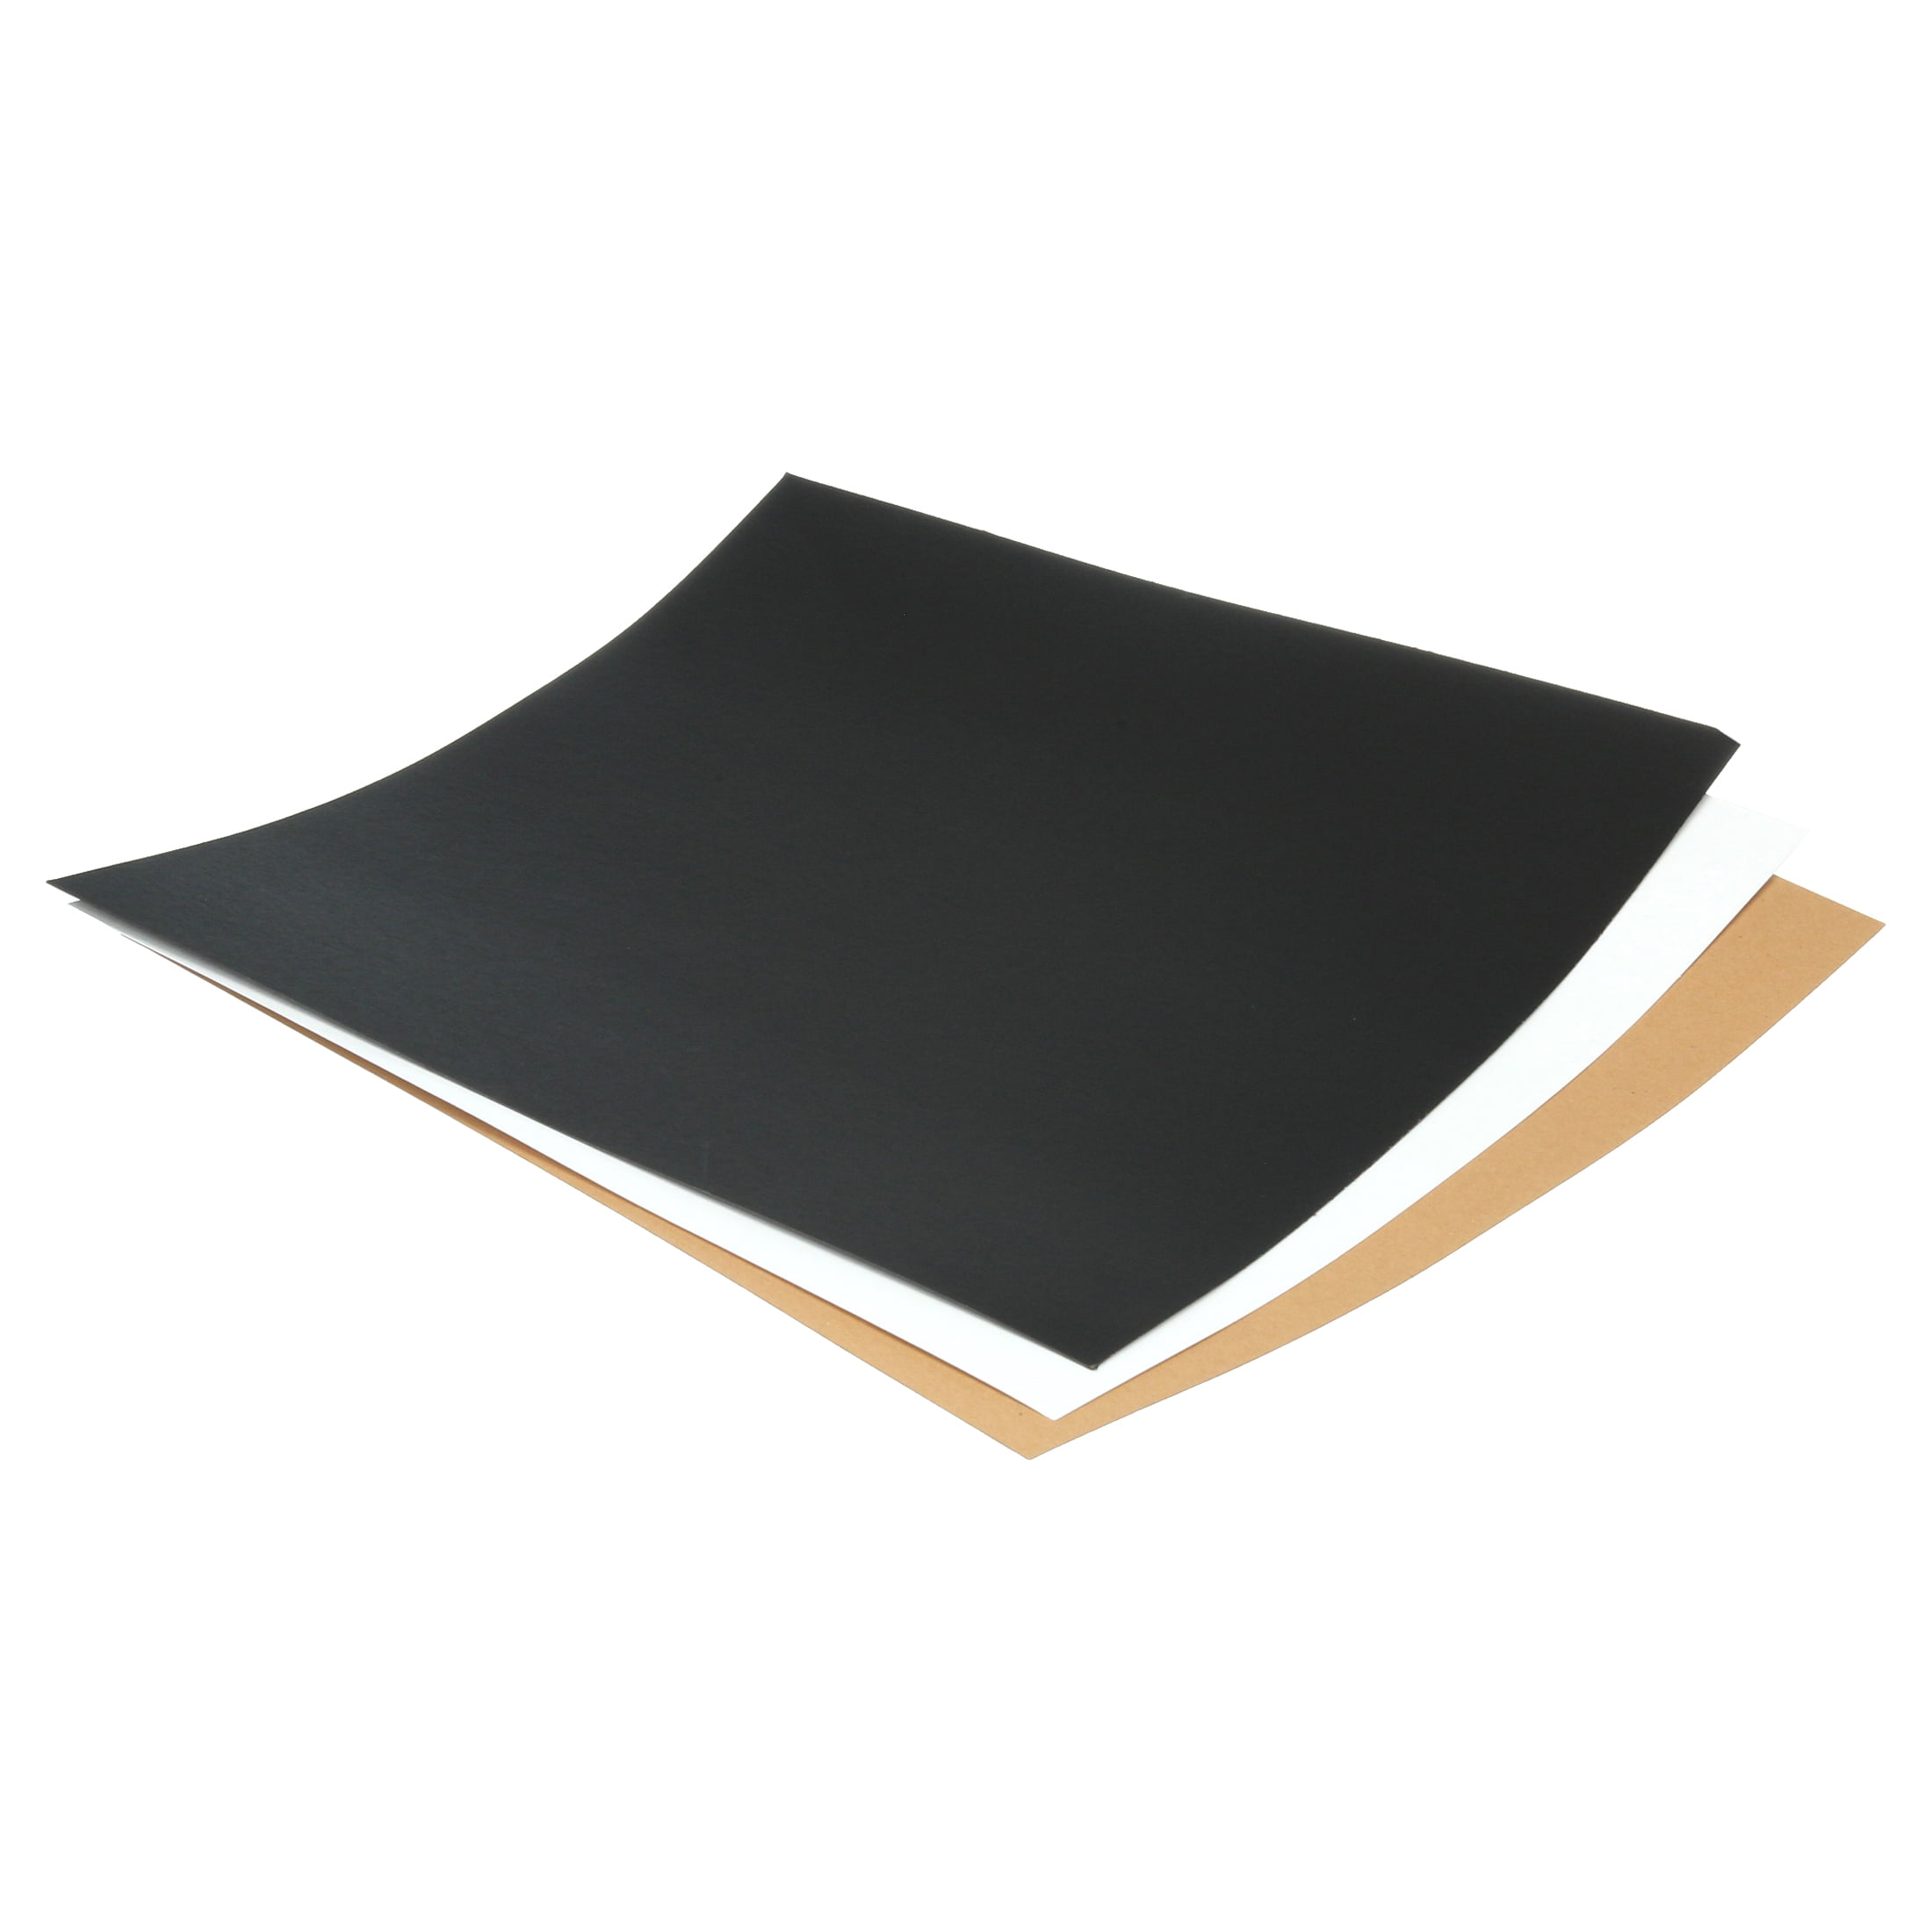 Cricut Kraftboard Paper, Sampler - 12x12 3 sheets 